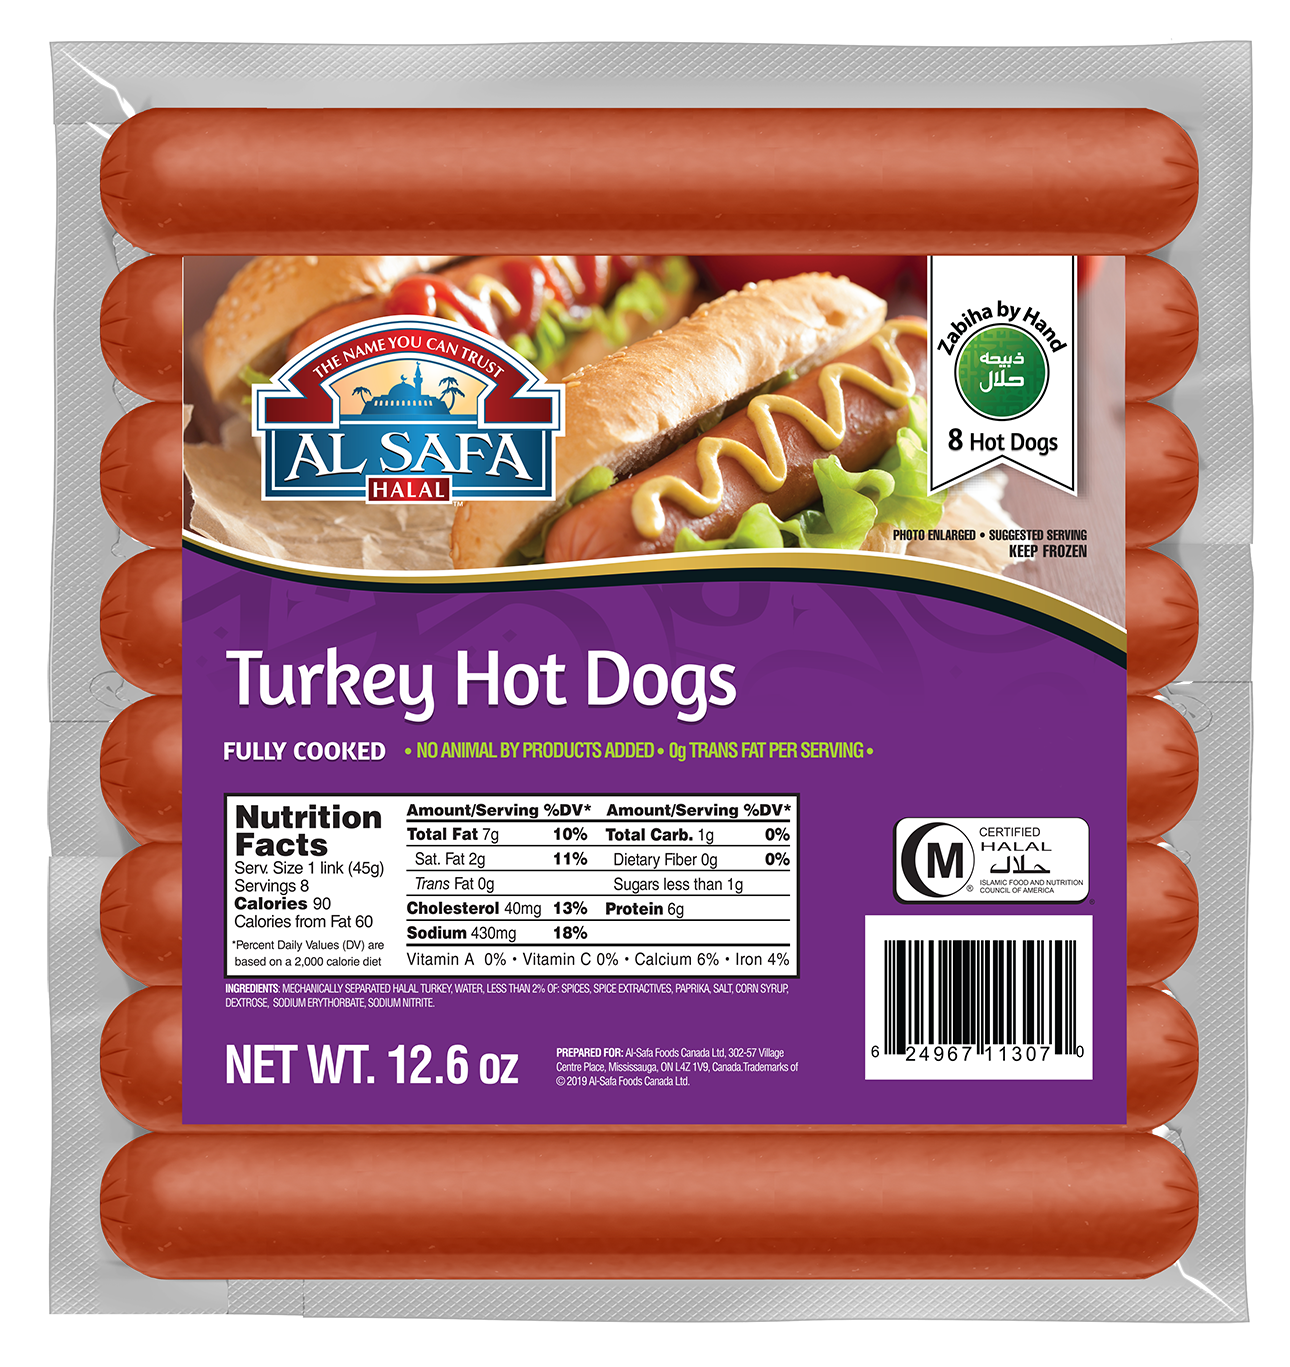 https://alsafahalal.com/wp-content/uploads/2020/01/Deli-11307-Turkey-Hot-Dogs-e1580835157665.png